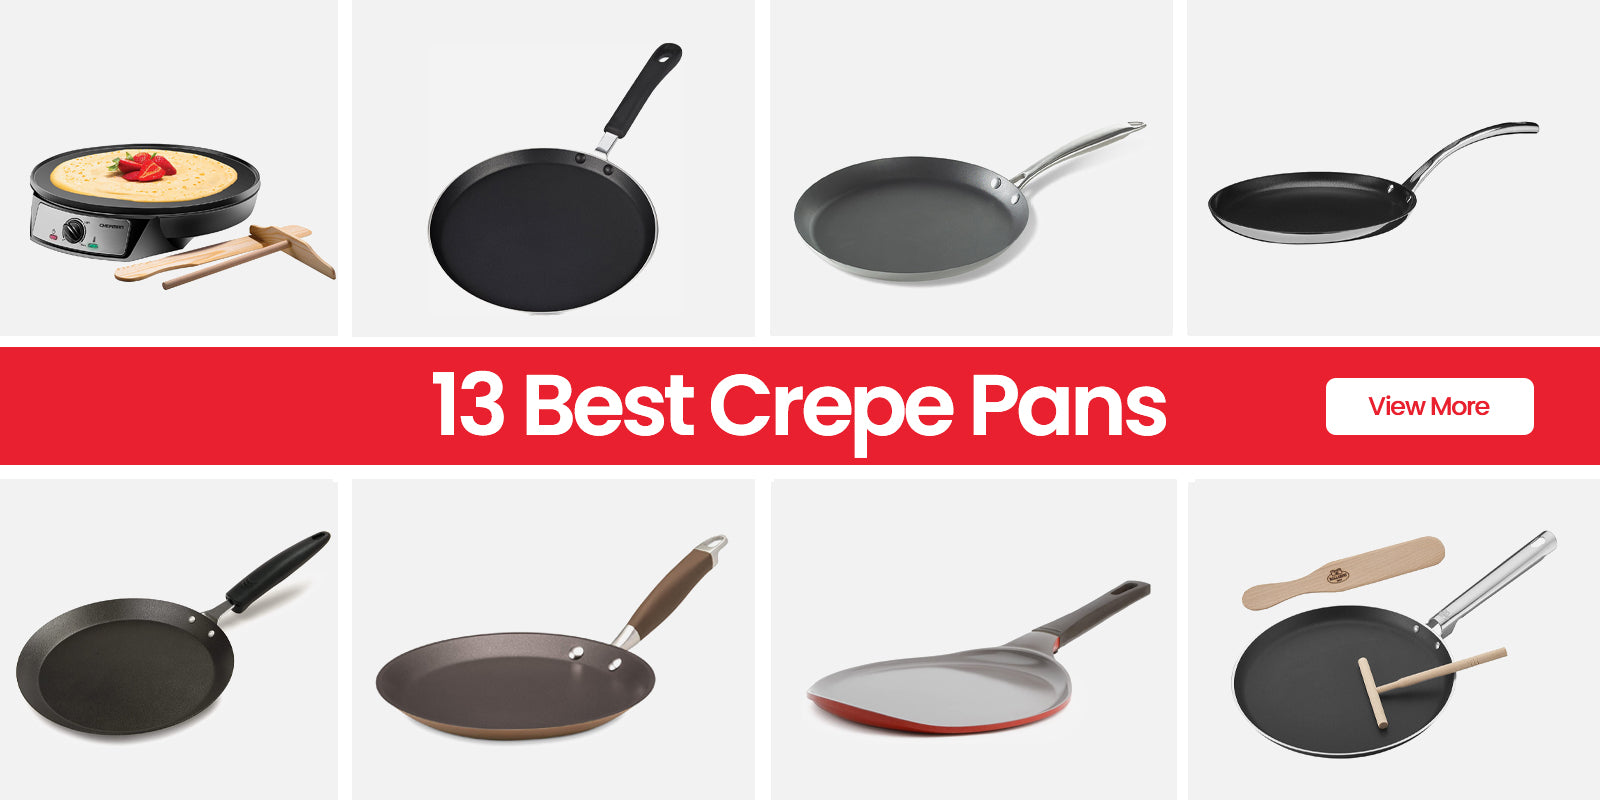 Pre Seasoned Cast Iron 12 inch Crepe Pan Set - 5 Piece Kitchen Pancake